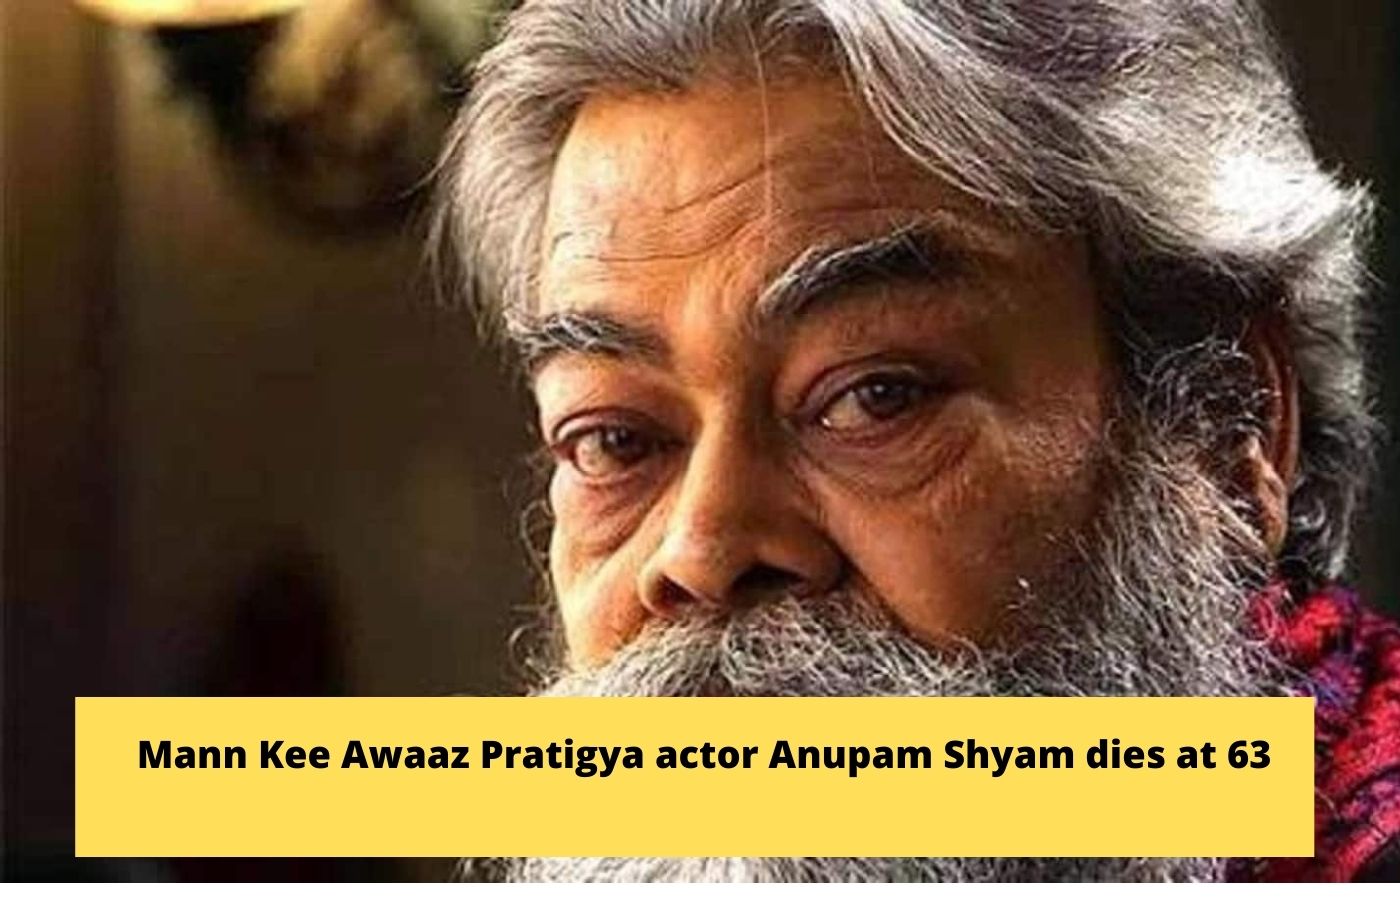 Mann Kee Awaaz Pratigya actor Anupam Shyam dies at 63